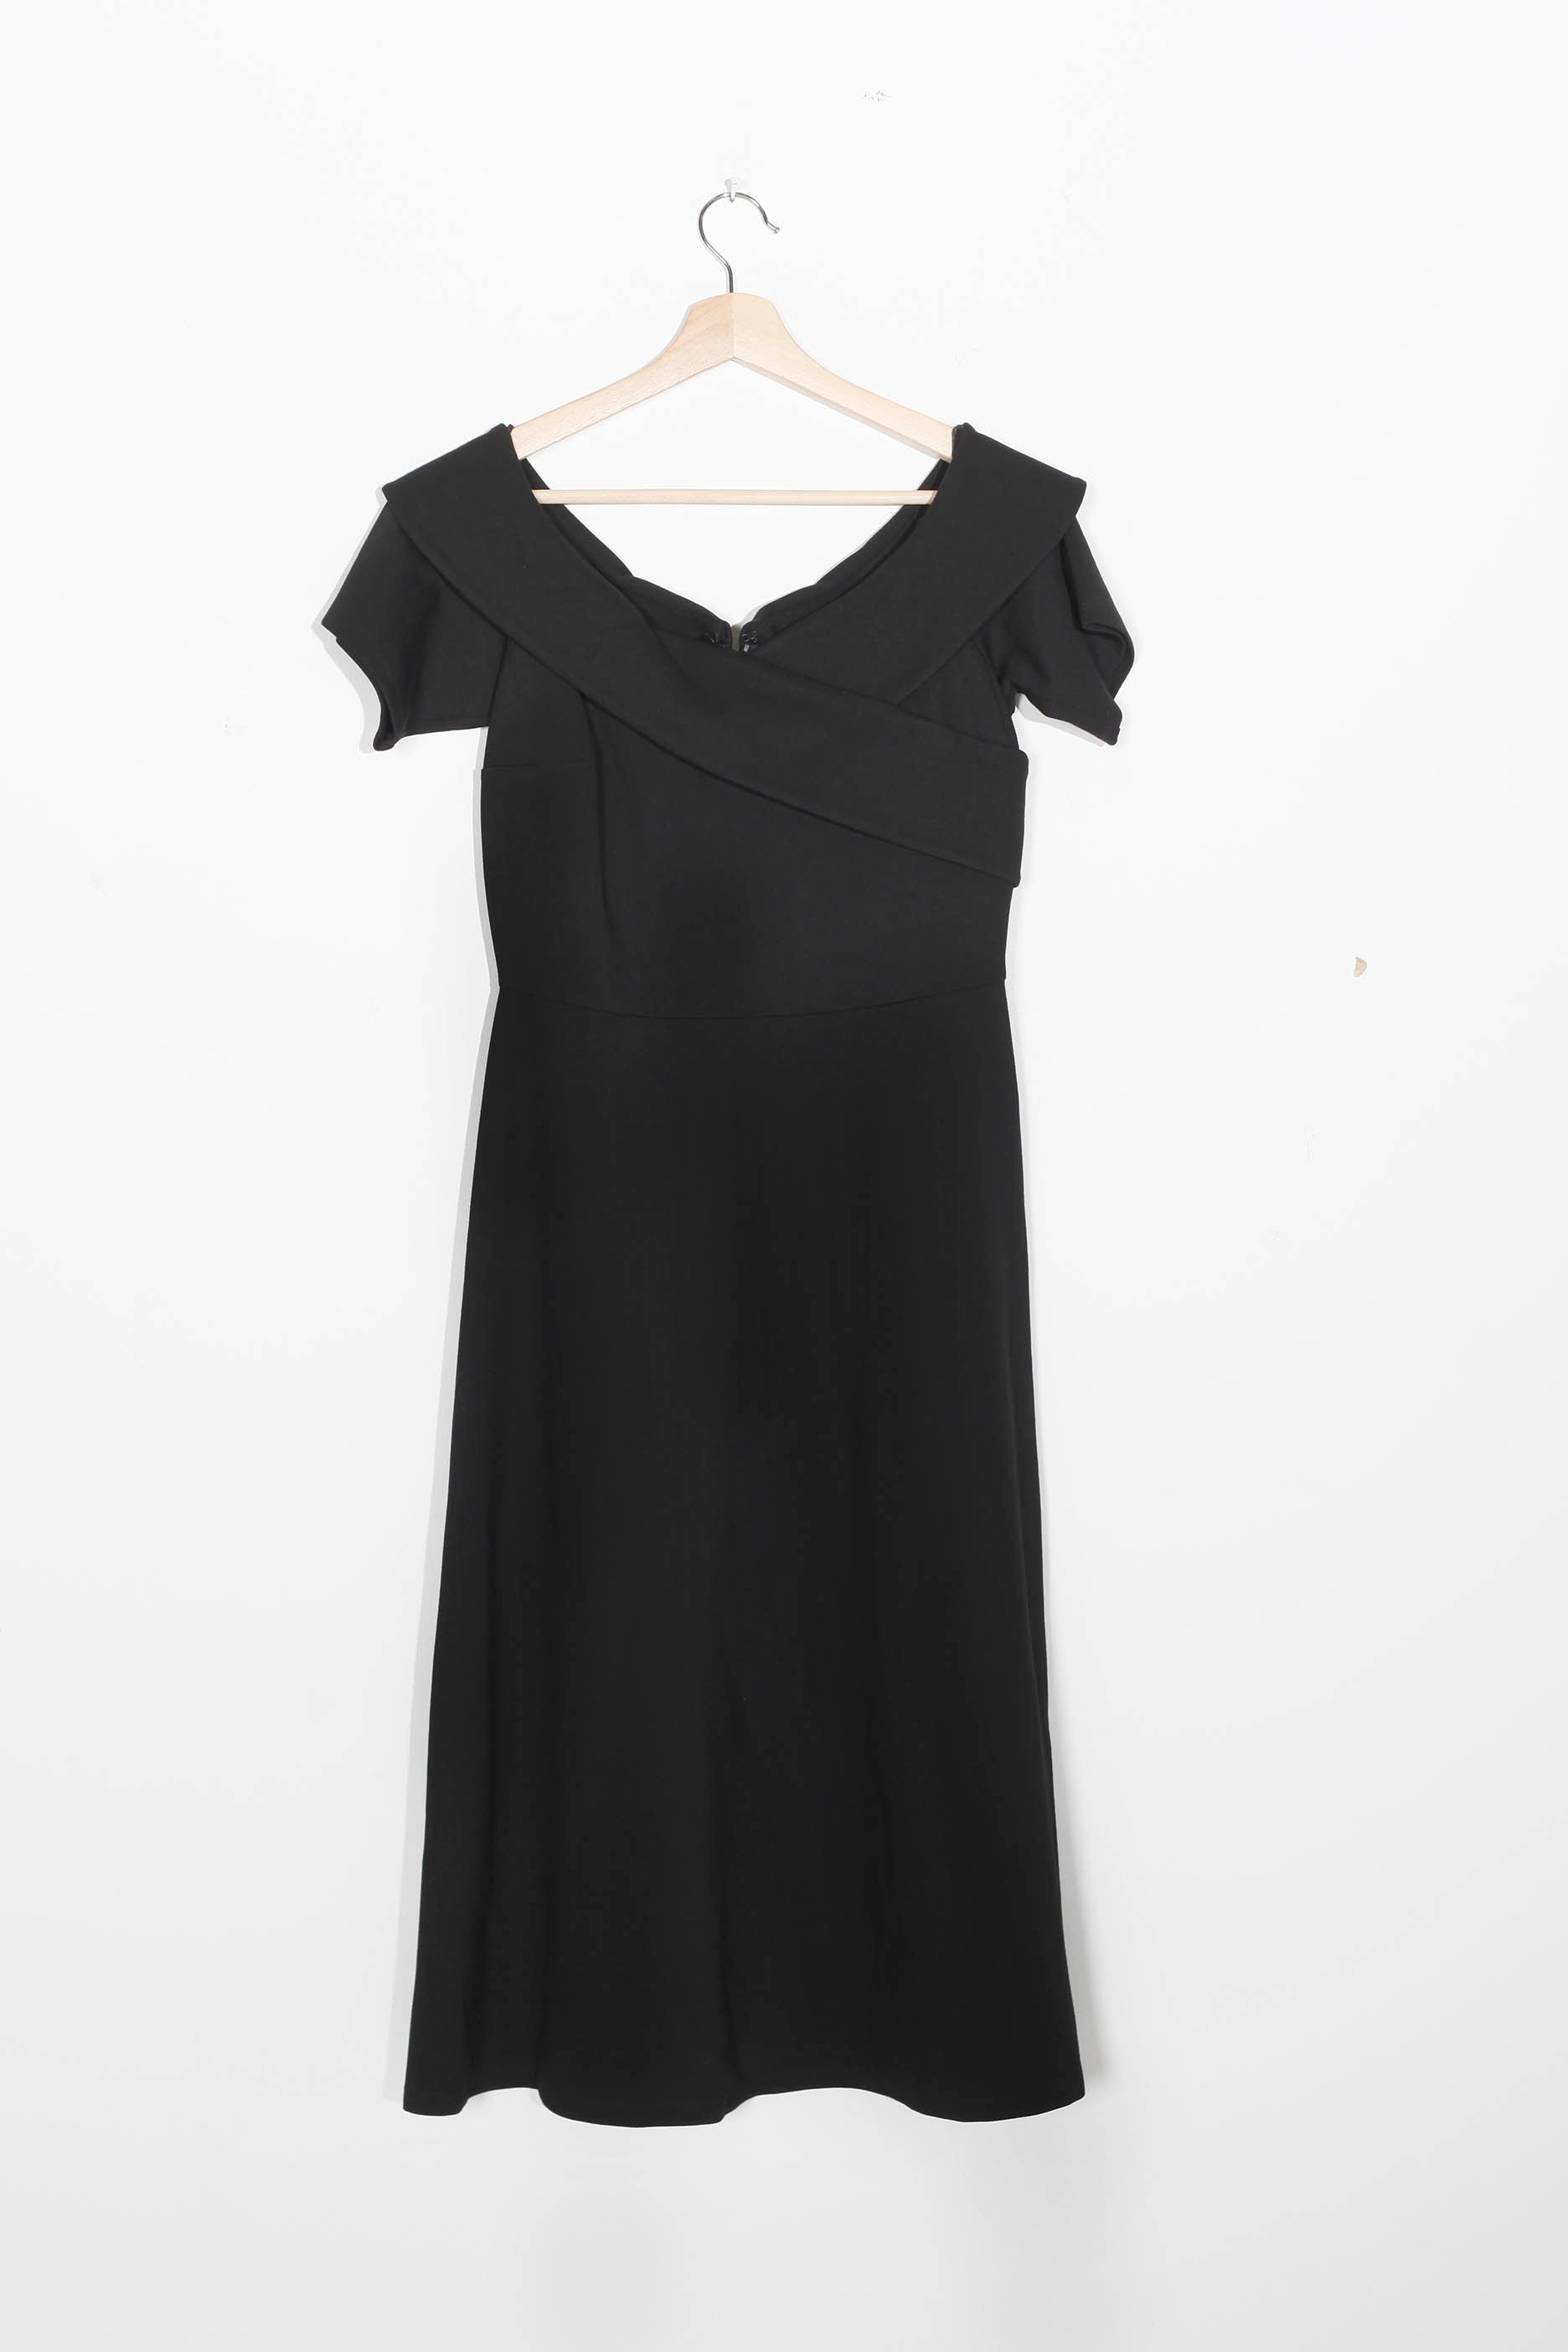 Black Midi Dress (Medium)